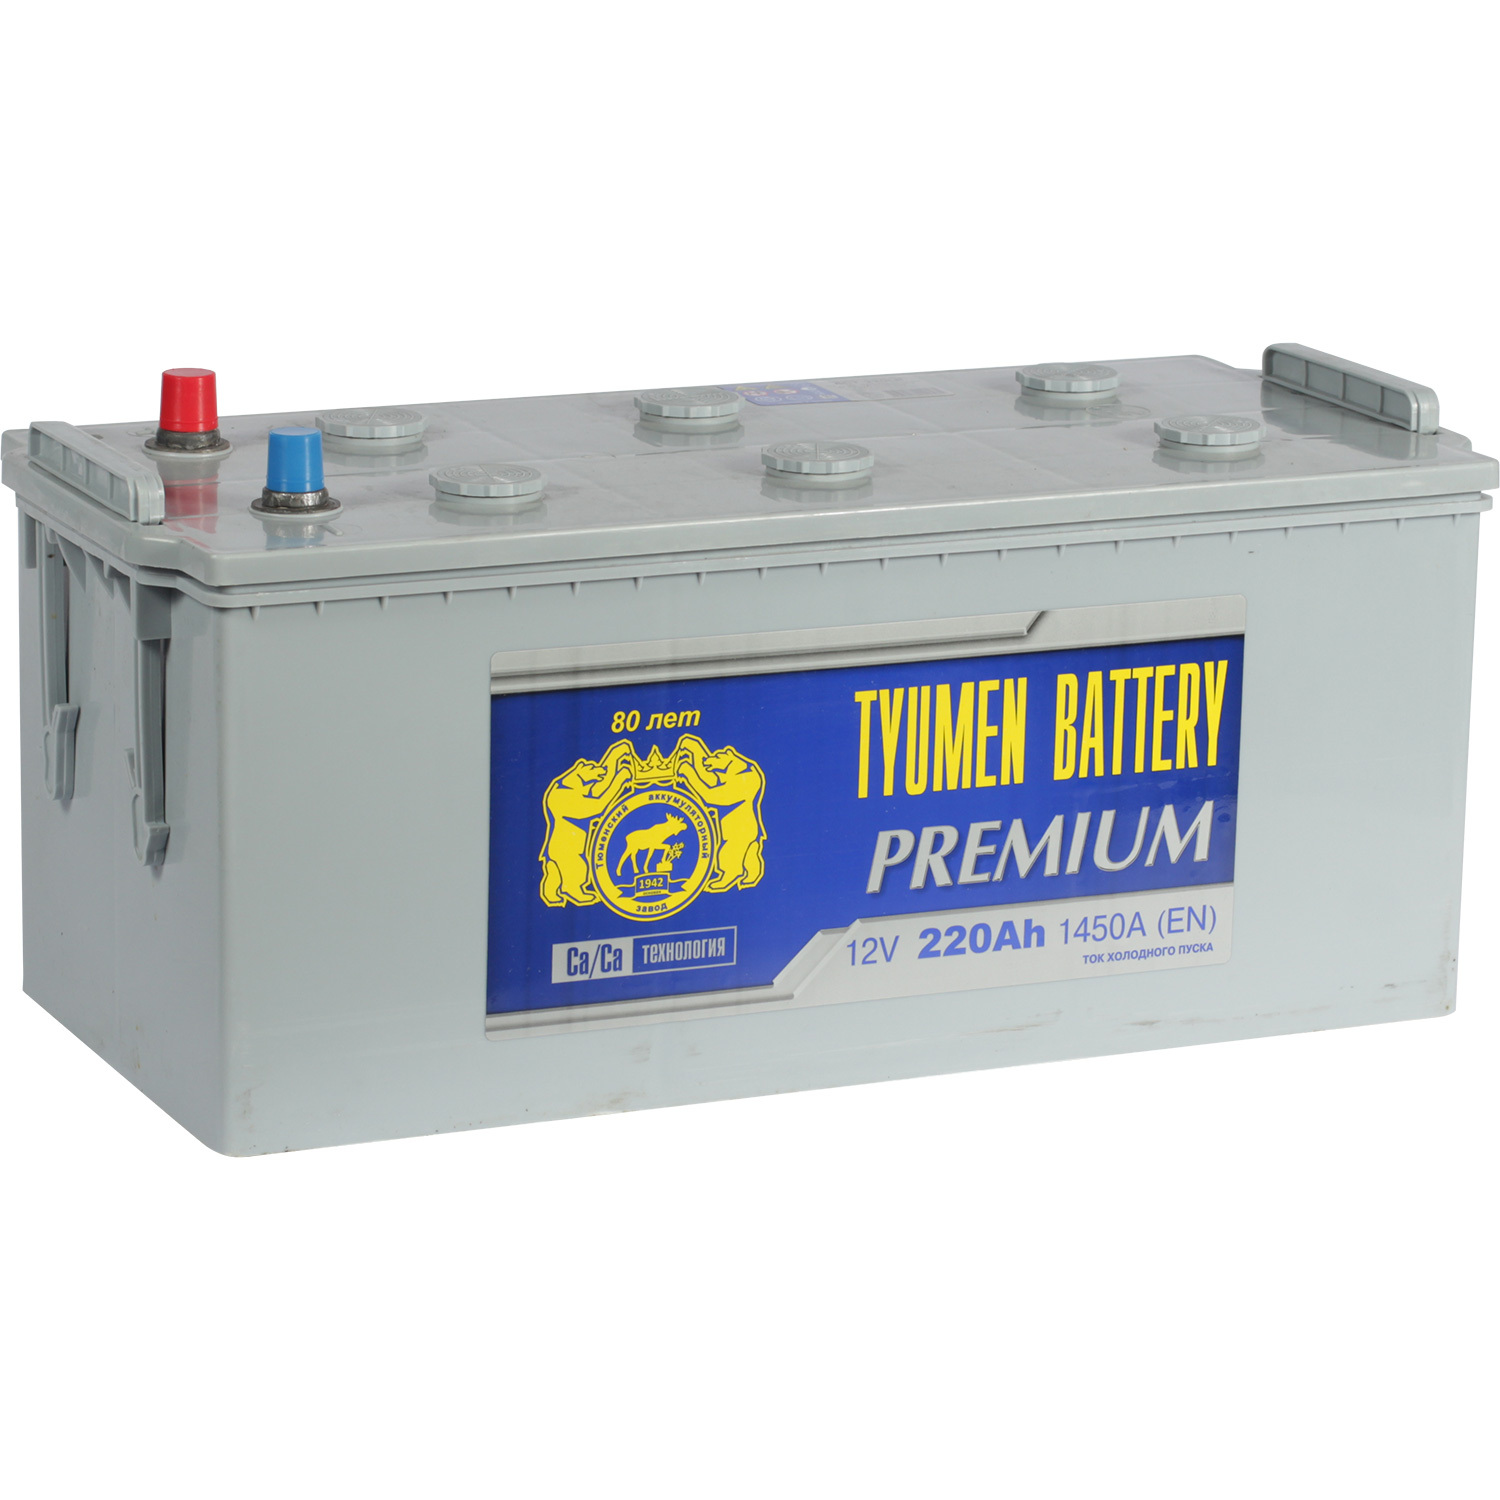 Tyumen Battery Грузовой аккумулятор Tyumen Battery Premium 220Ач о/п конус